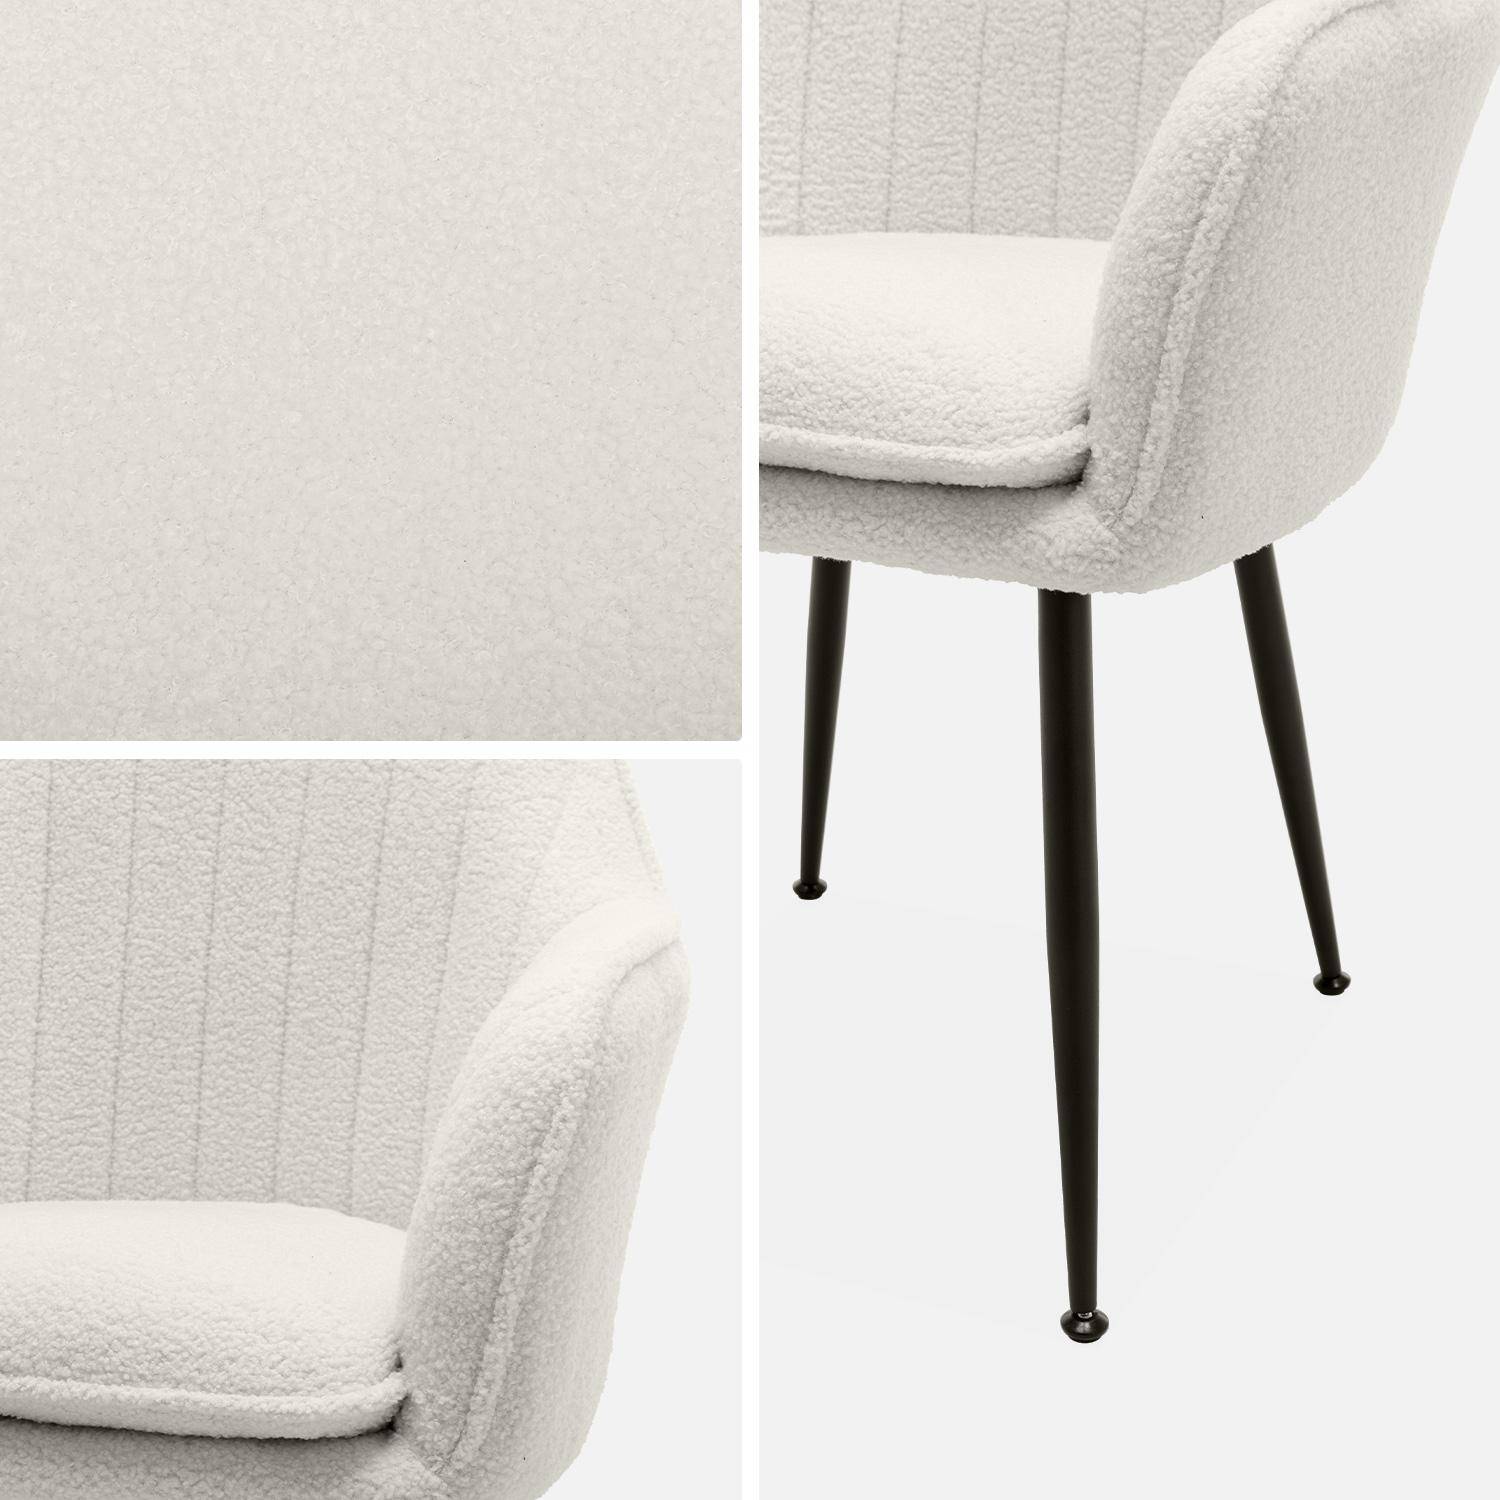 Boucle armchair with metal legs, 58x58x85cm - Shella Boucle - White Photo6